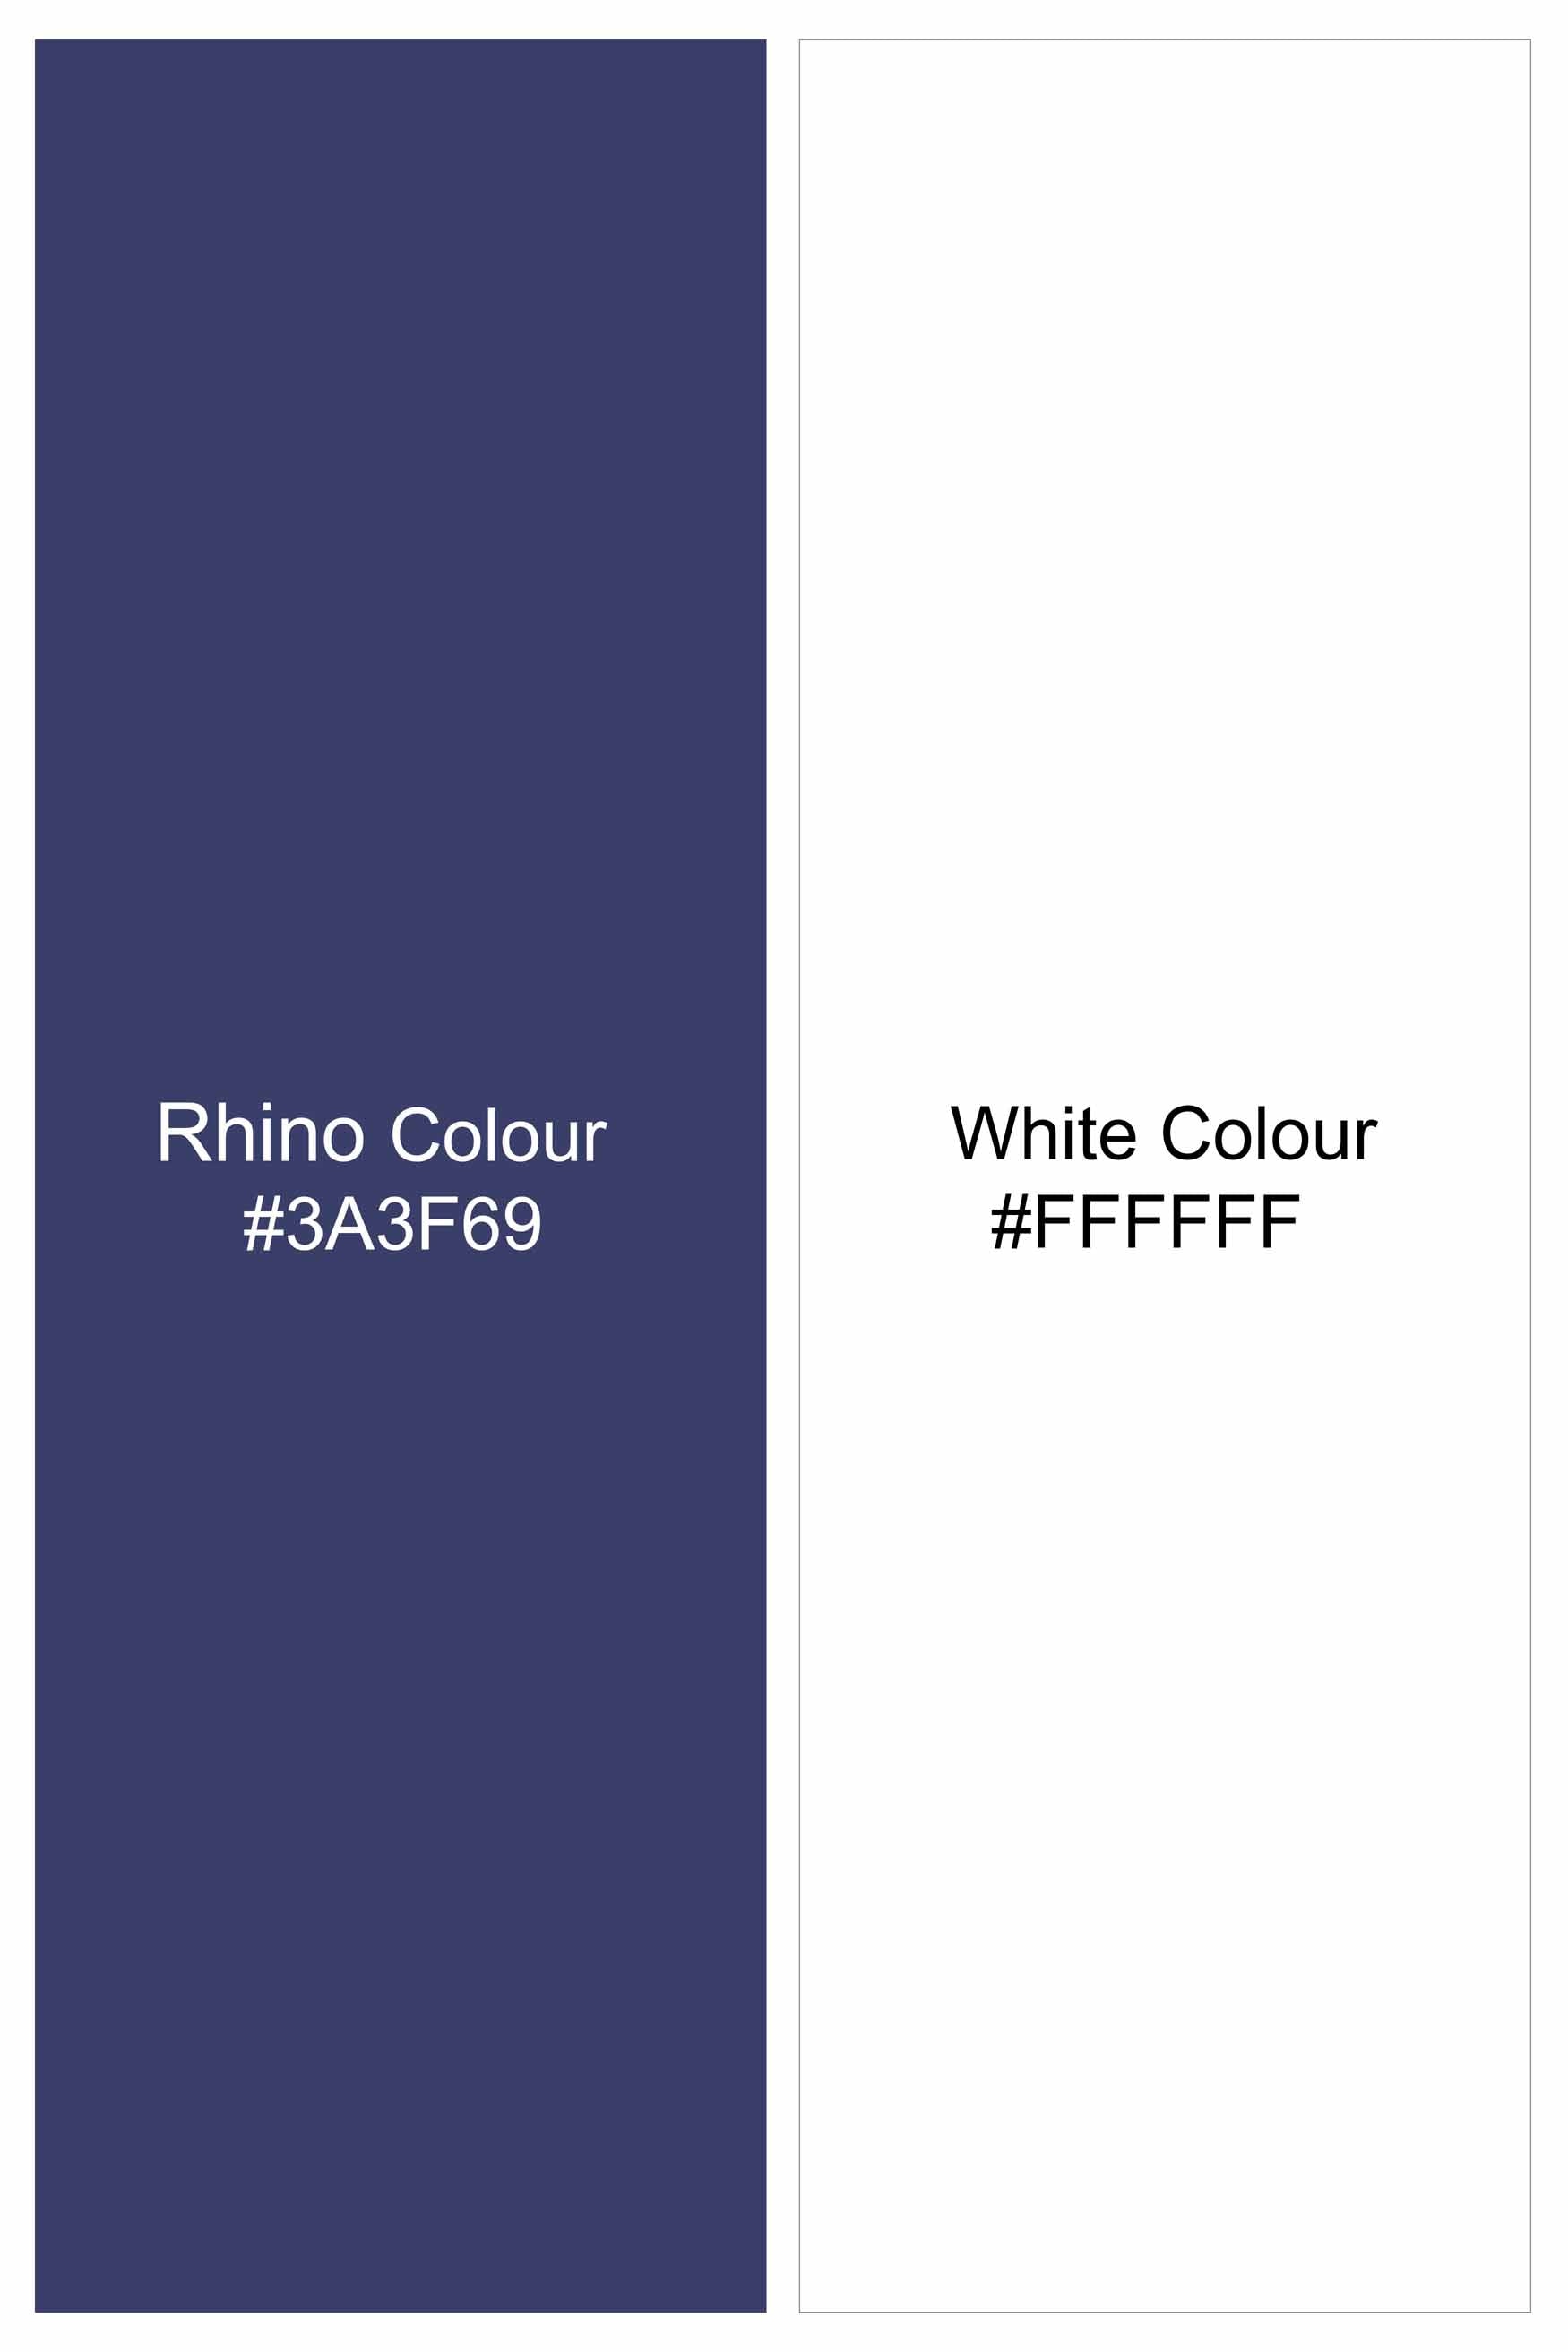 Rhino Blue and White Plaid with Animated Creature Patchwork Twill Premium Cotton Designer Shirt 6247-BLE-E340-38, 6247-BLE-E340-H-38, 6247-BLE-E340-39, 6247-BLE-E340-H-39, 6247-BLE-E340-40, 6247-BLE-E340-H-40, 6247-BLE-E340-42, 6247-BLE-E340-H-42, 6247-BLE-E340-44, 6247-BLE-E340-H-44, 6247-BLE-E340-46, 6247-BLE-E340-H-46, 6247-BLE-E340-48, 6247-BLE-E340-H-48, 6247-BLE-E340-50, 6247-BLE-E340-H-50, 6247-BLE-E340-52, 6247-BLE-E340-H-52